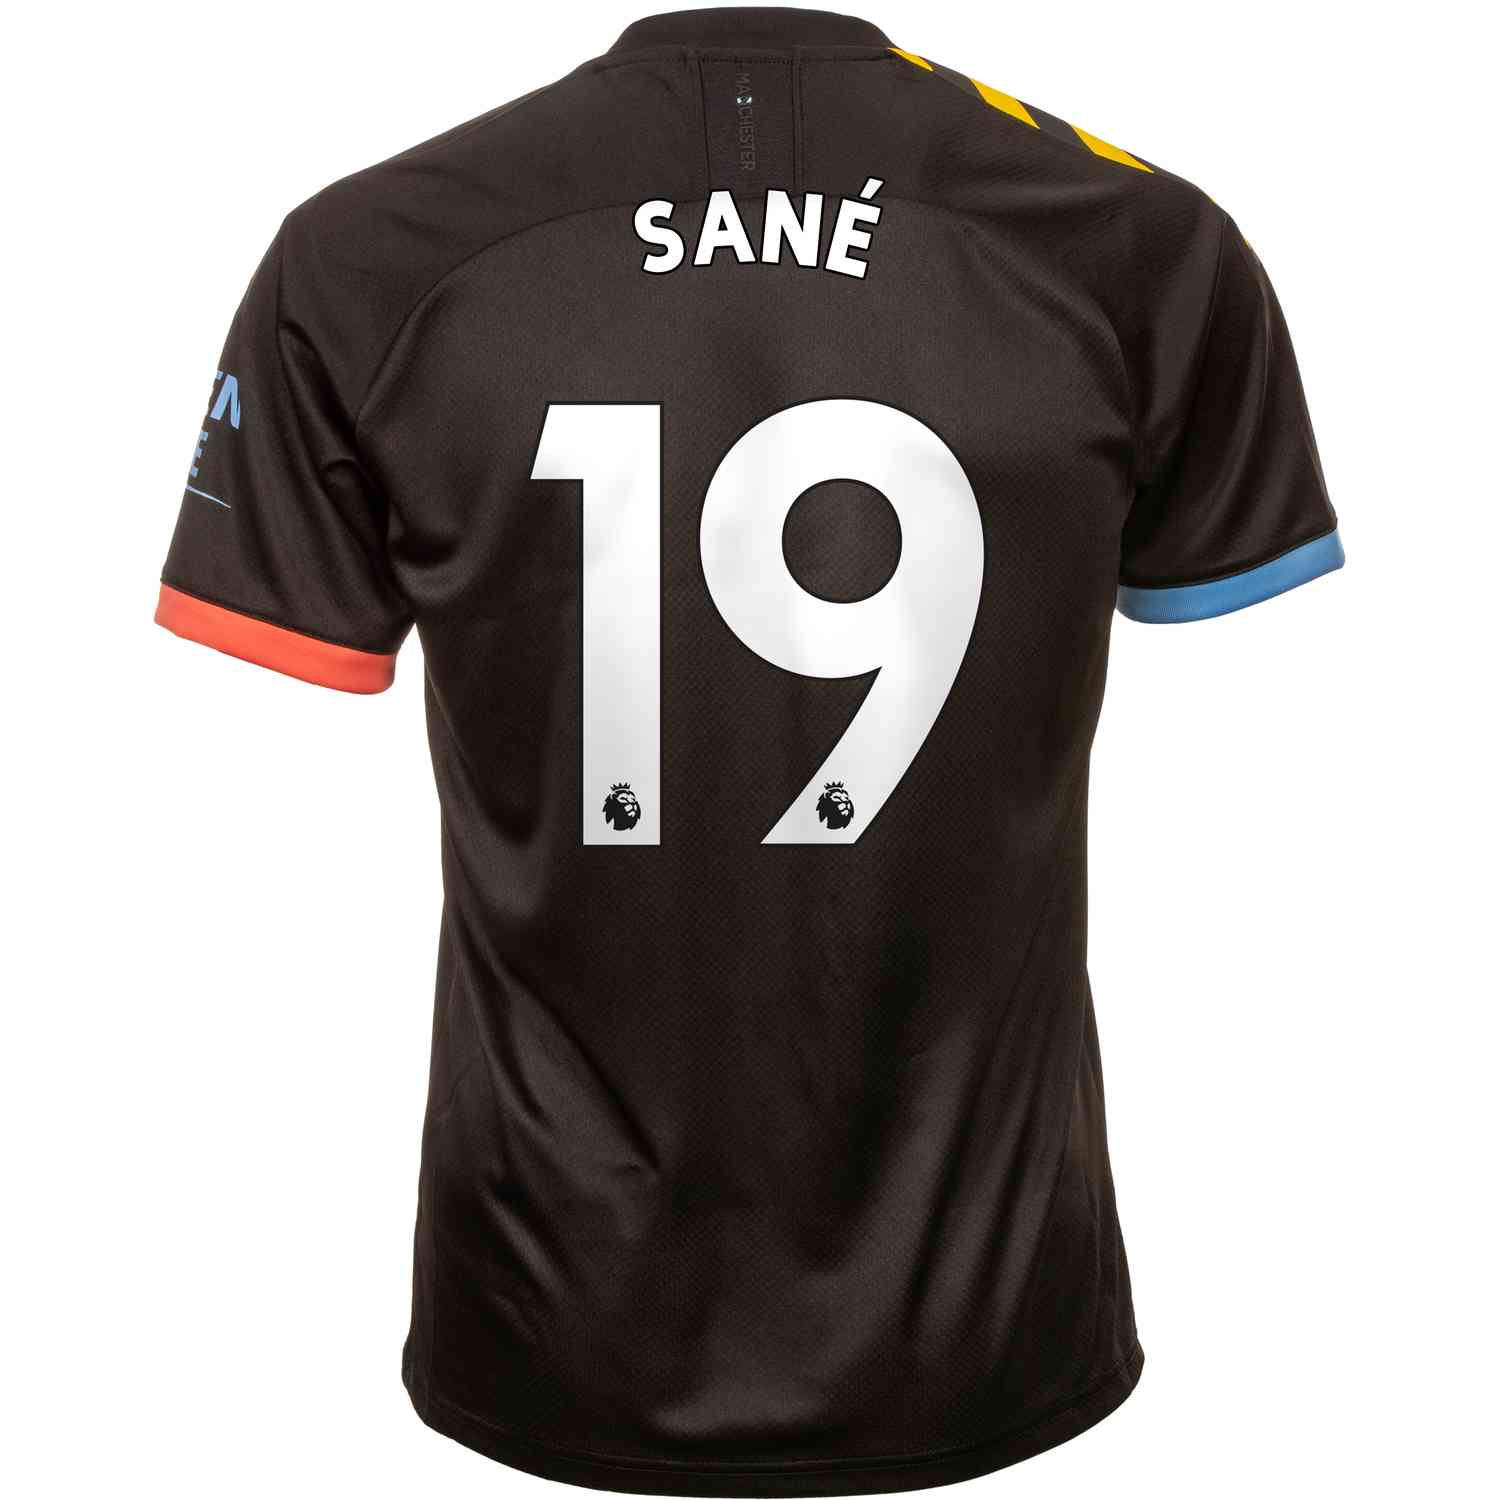 2019/20 PUMA Leroy Sane Manchester City 